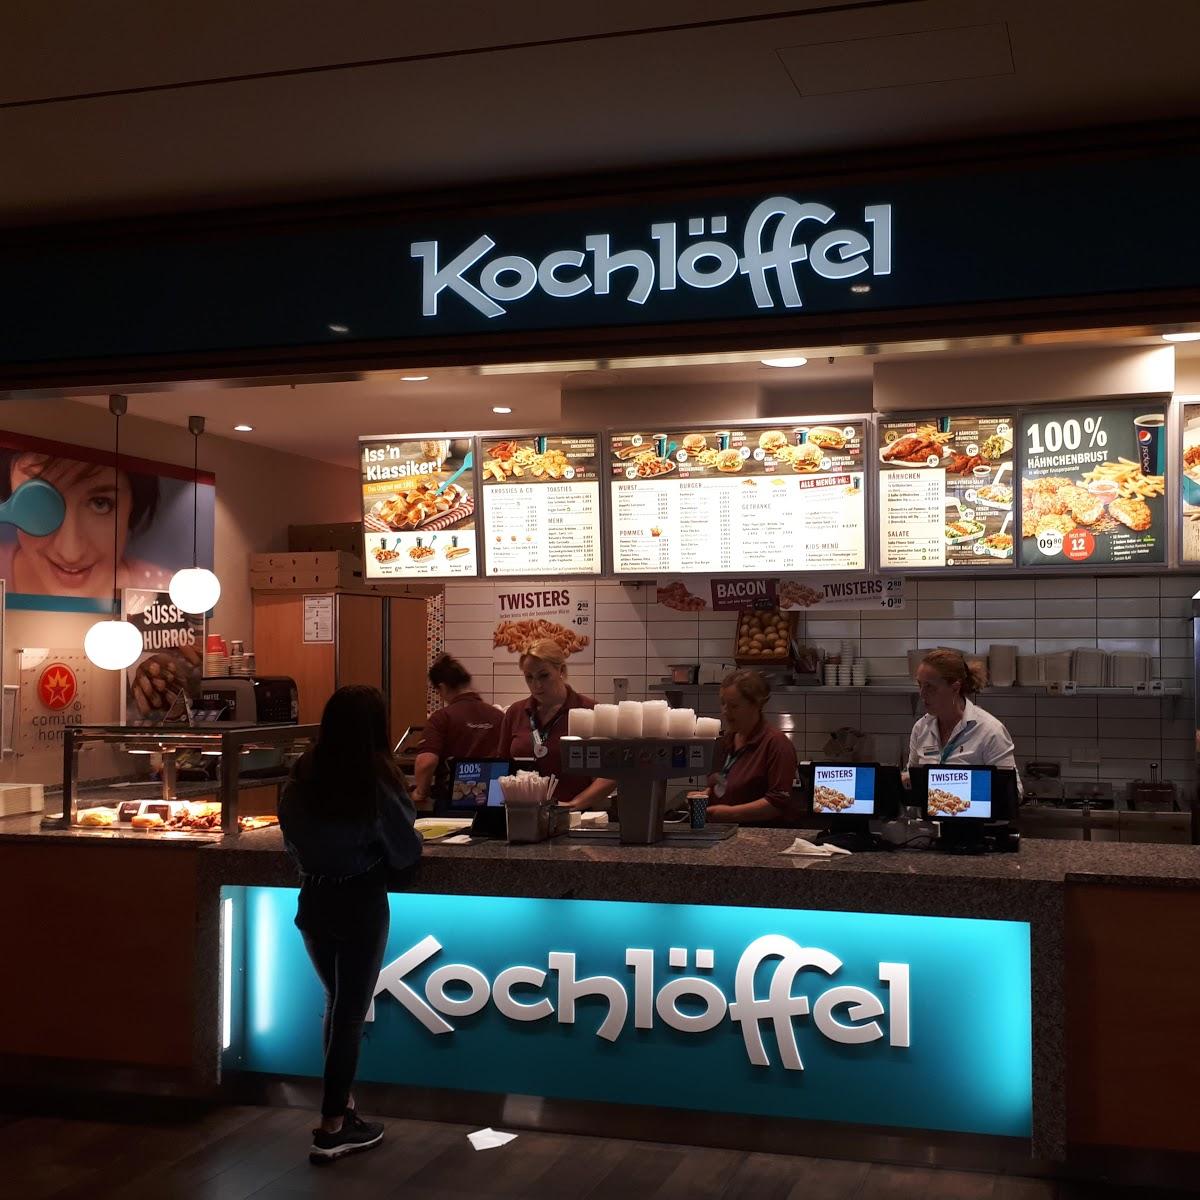 Restaurant "Kochlöffel" in Ludwigsburg